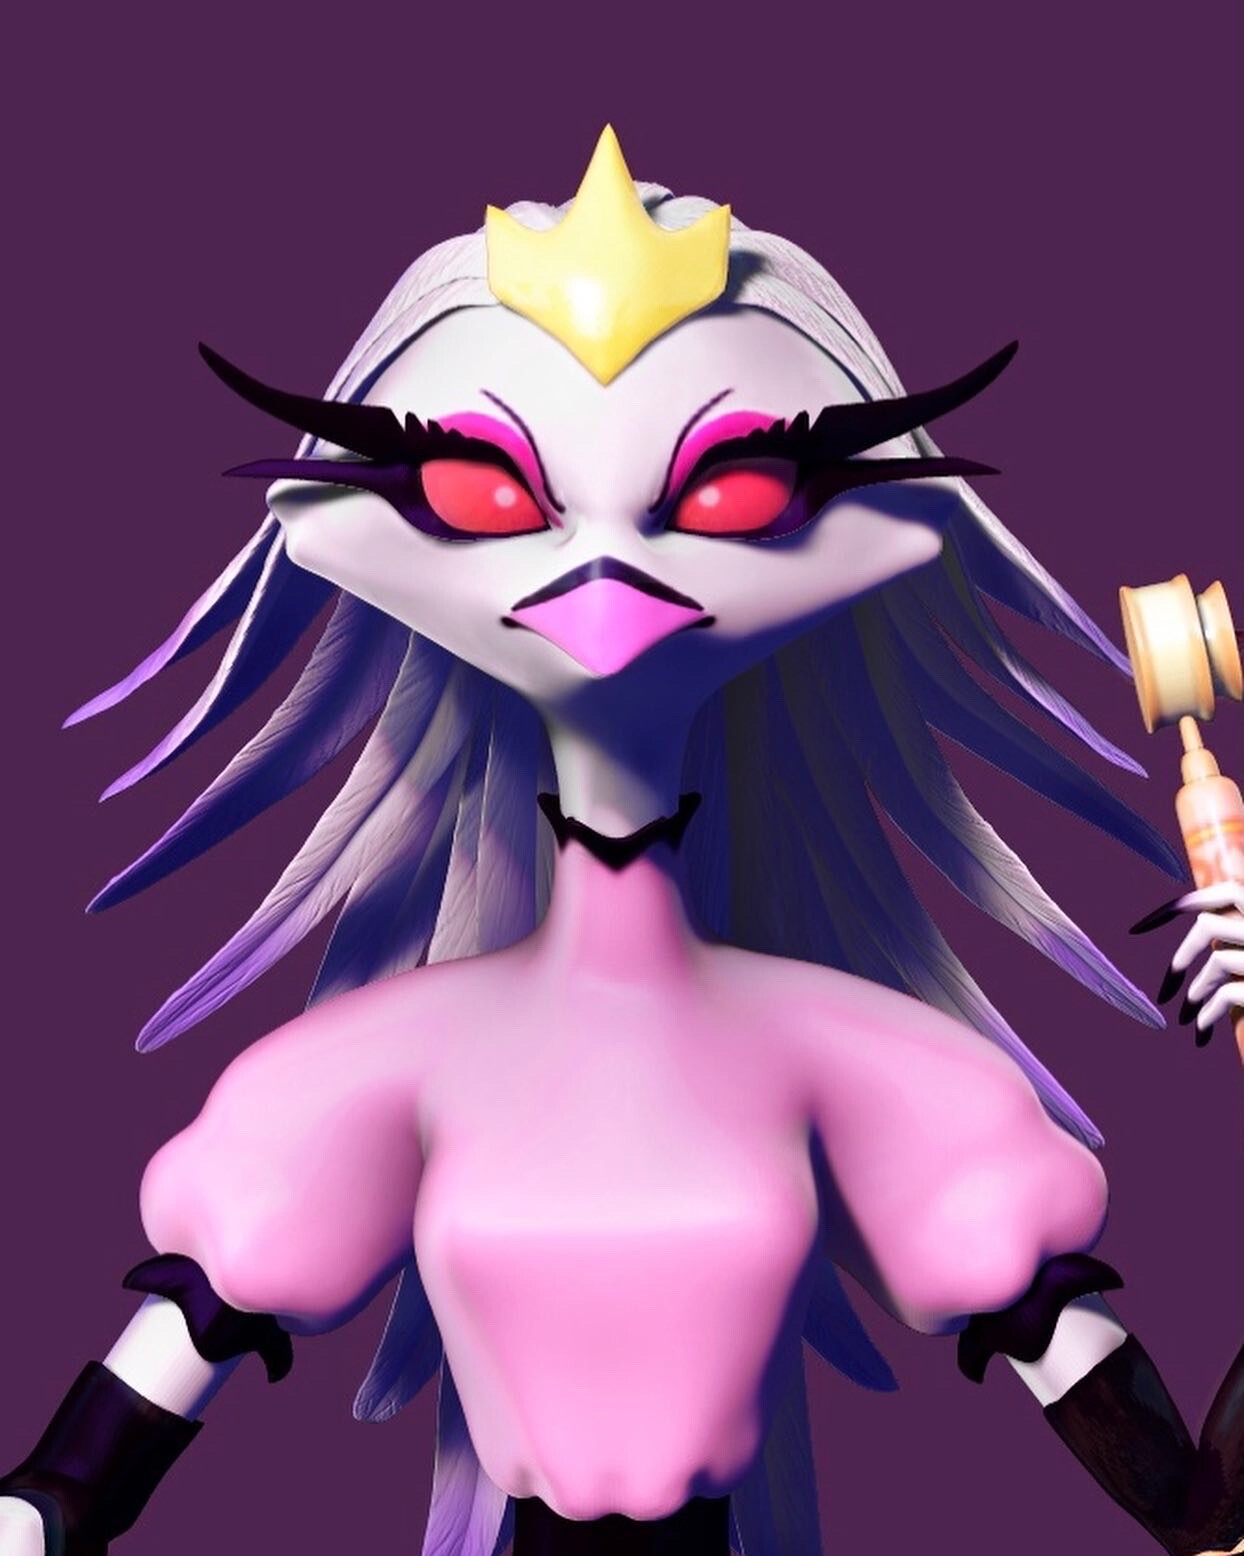 ArtStation - Stella, a character in animated web series “Helluva boss”